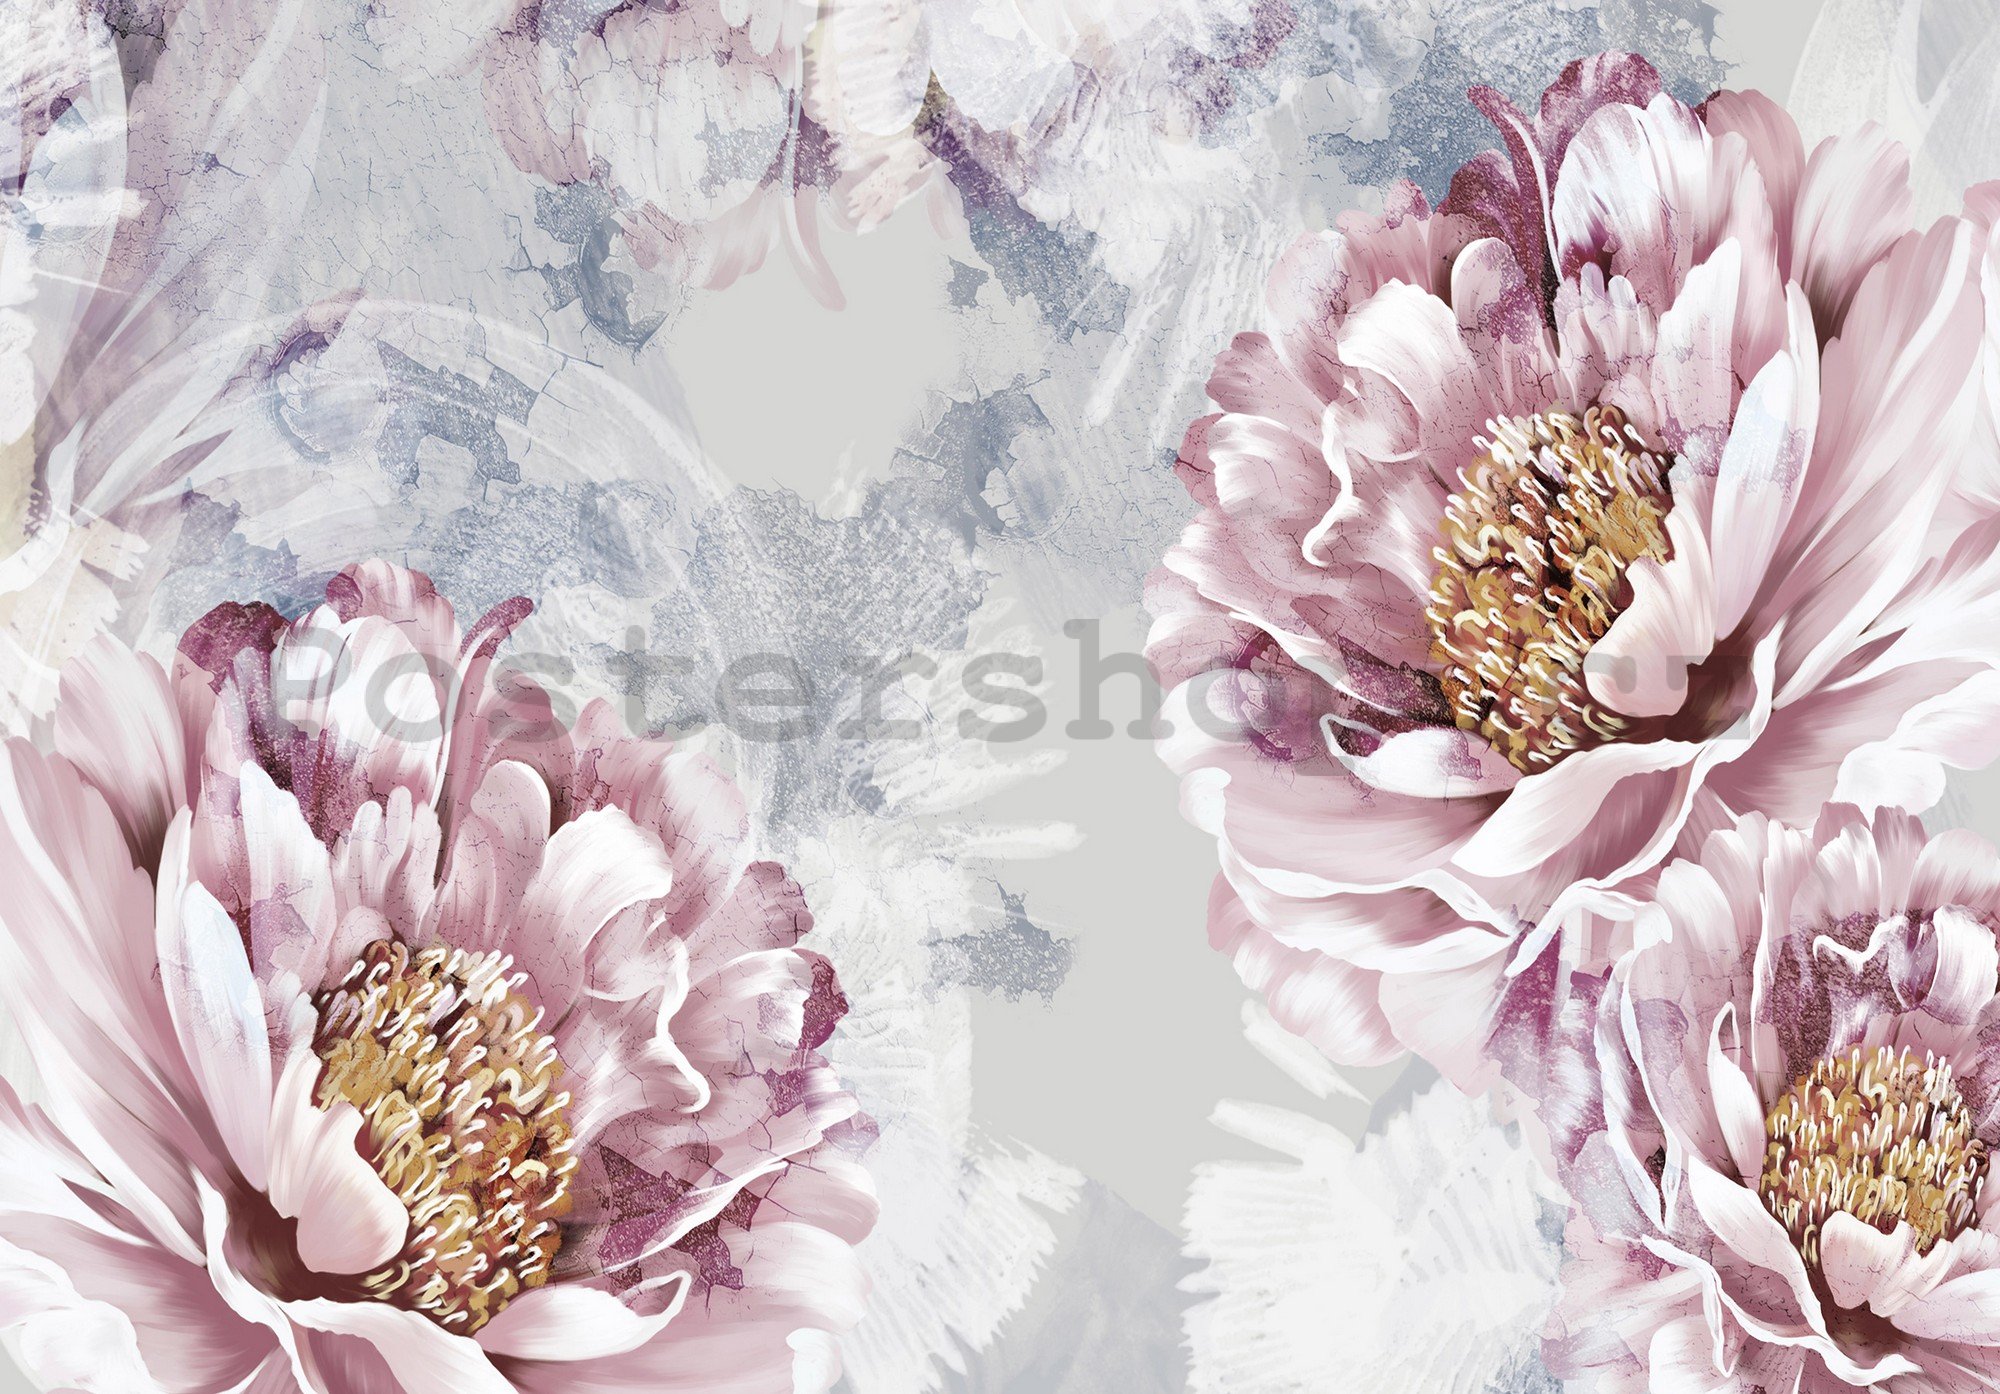 Fototapeta vliesová: Flowers (3) - 312x219cm